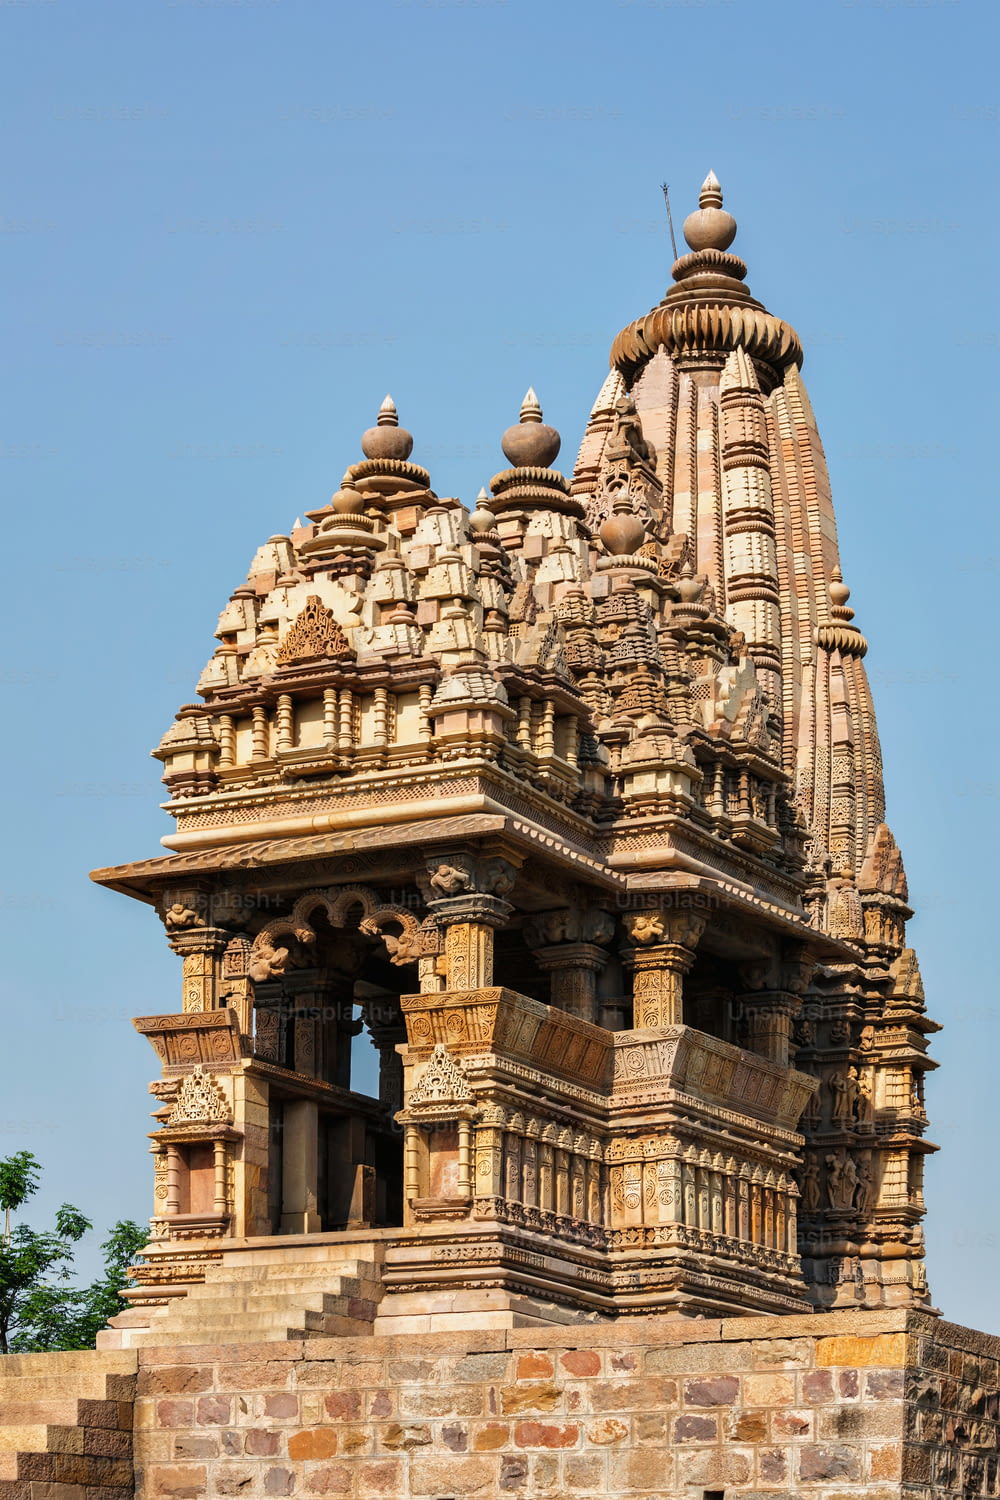 Javari Temple - one of famous tourist attractions of Khajuraho with sculptures. India, Khajuraho, Madhya Pradesh, India, Khajuraho, Madhya Pradesh, India